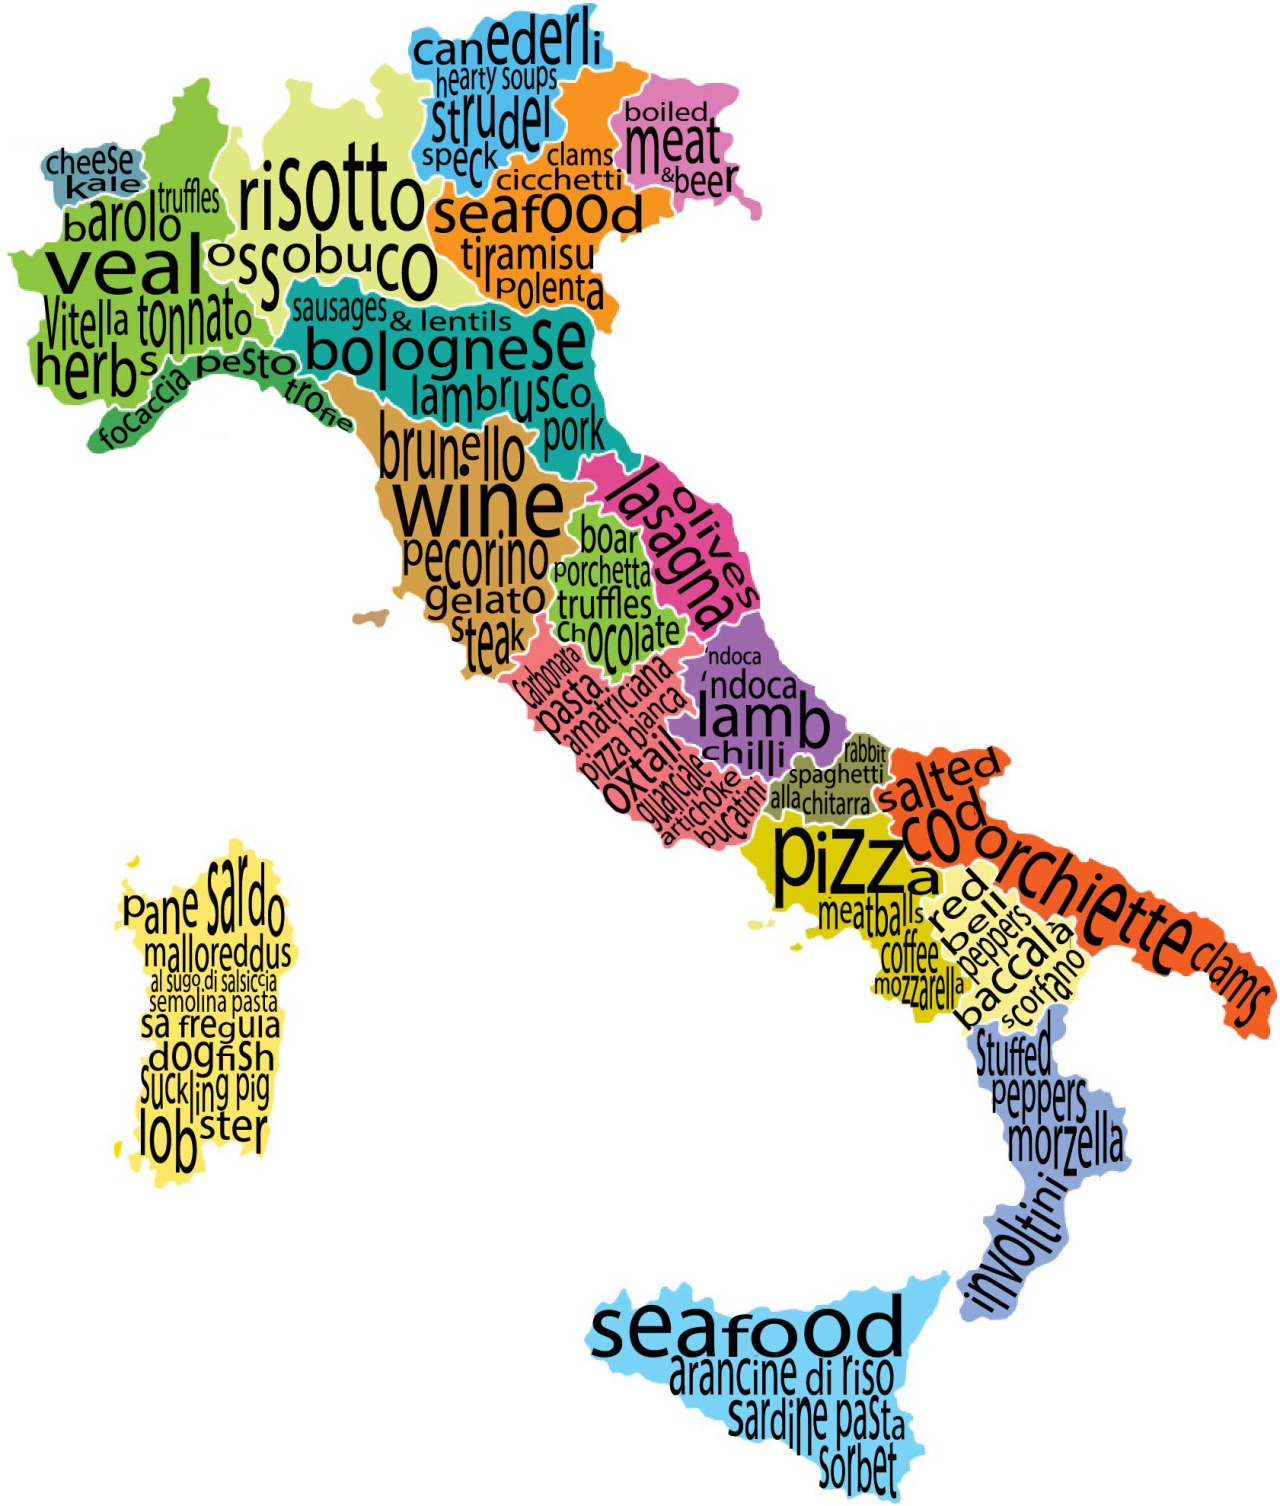 mapsontheweb:
“Italian food
”